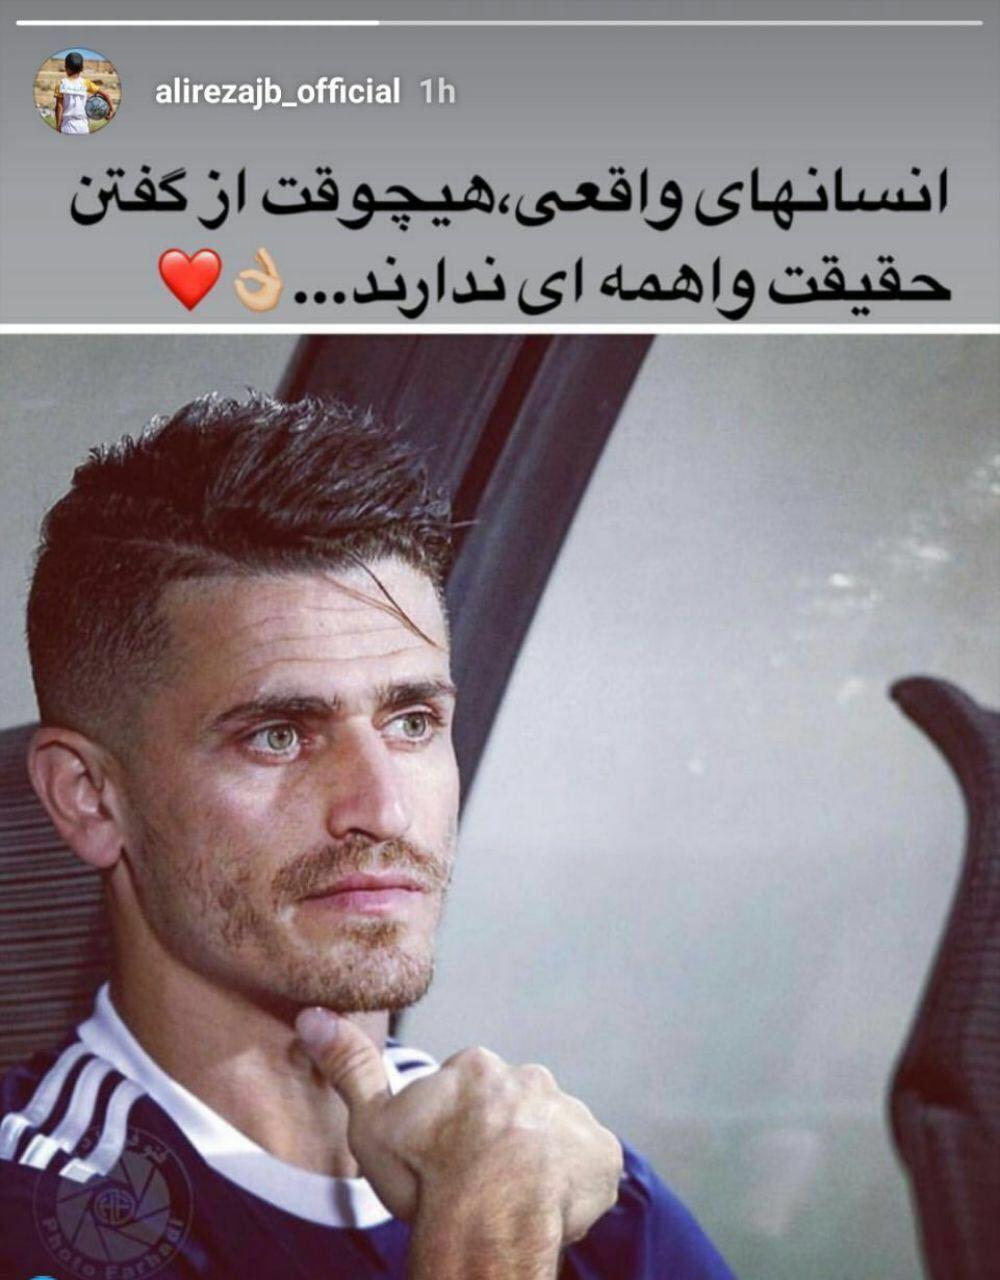 Iran summons Kurdish football player over criticizing FM